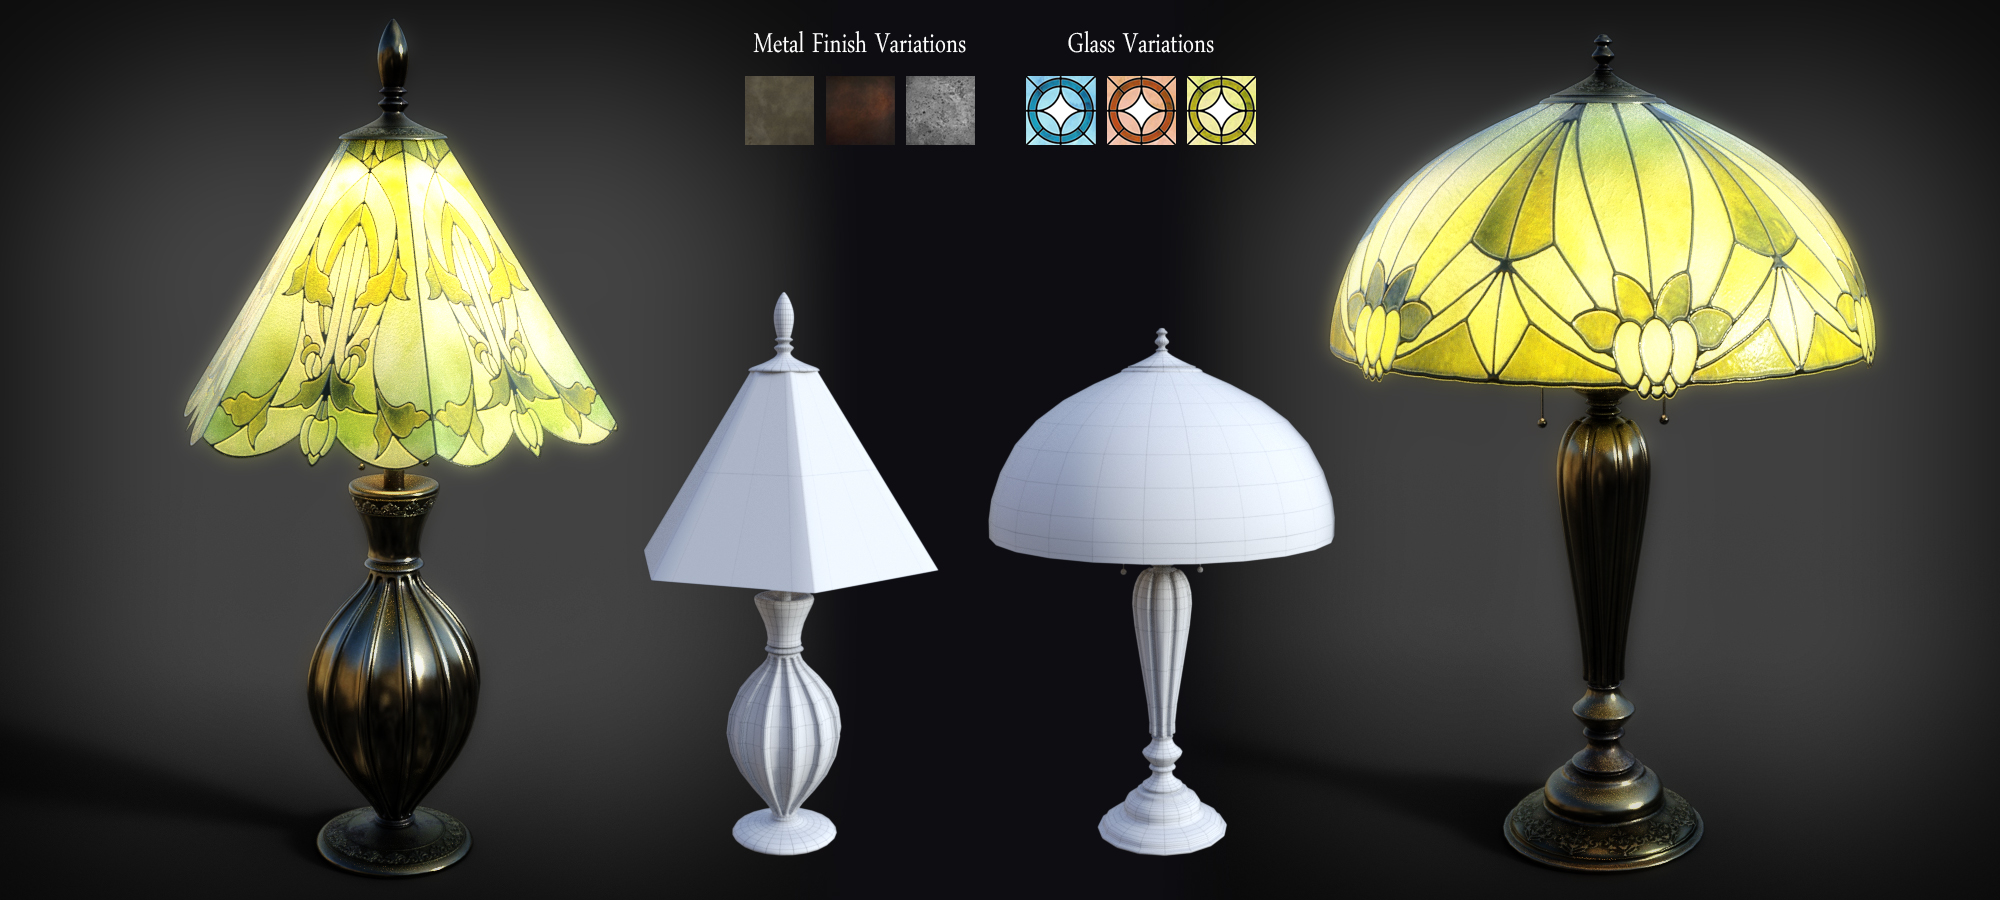 B.E.T.T.Y. Stained Glass Lamps by: B.E.T.T.Y, 3D Models by Daz 3D